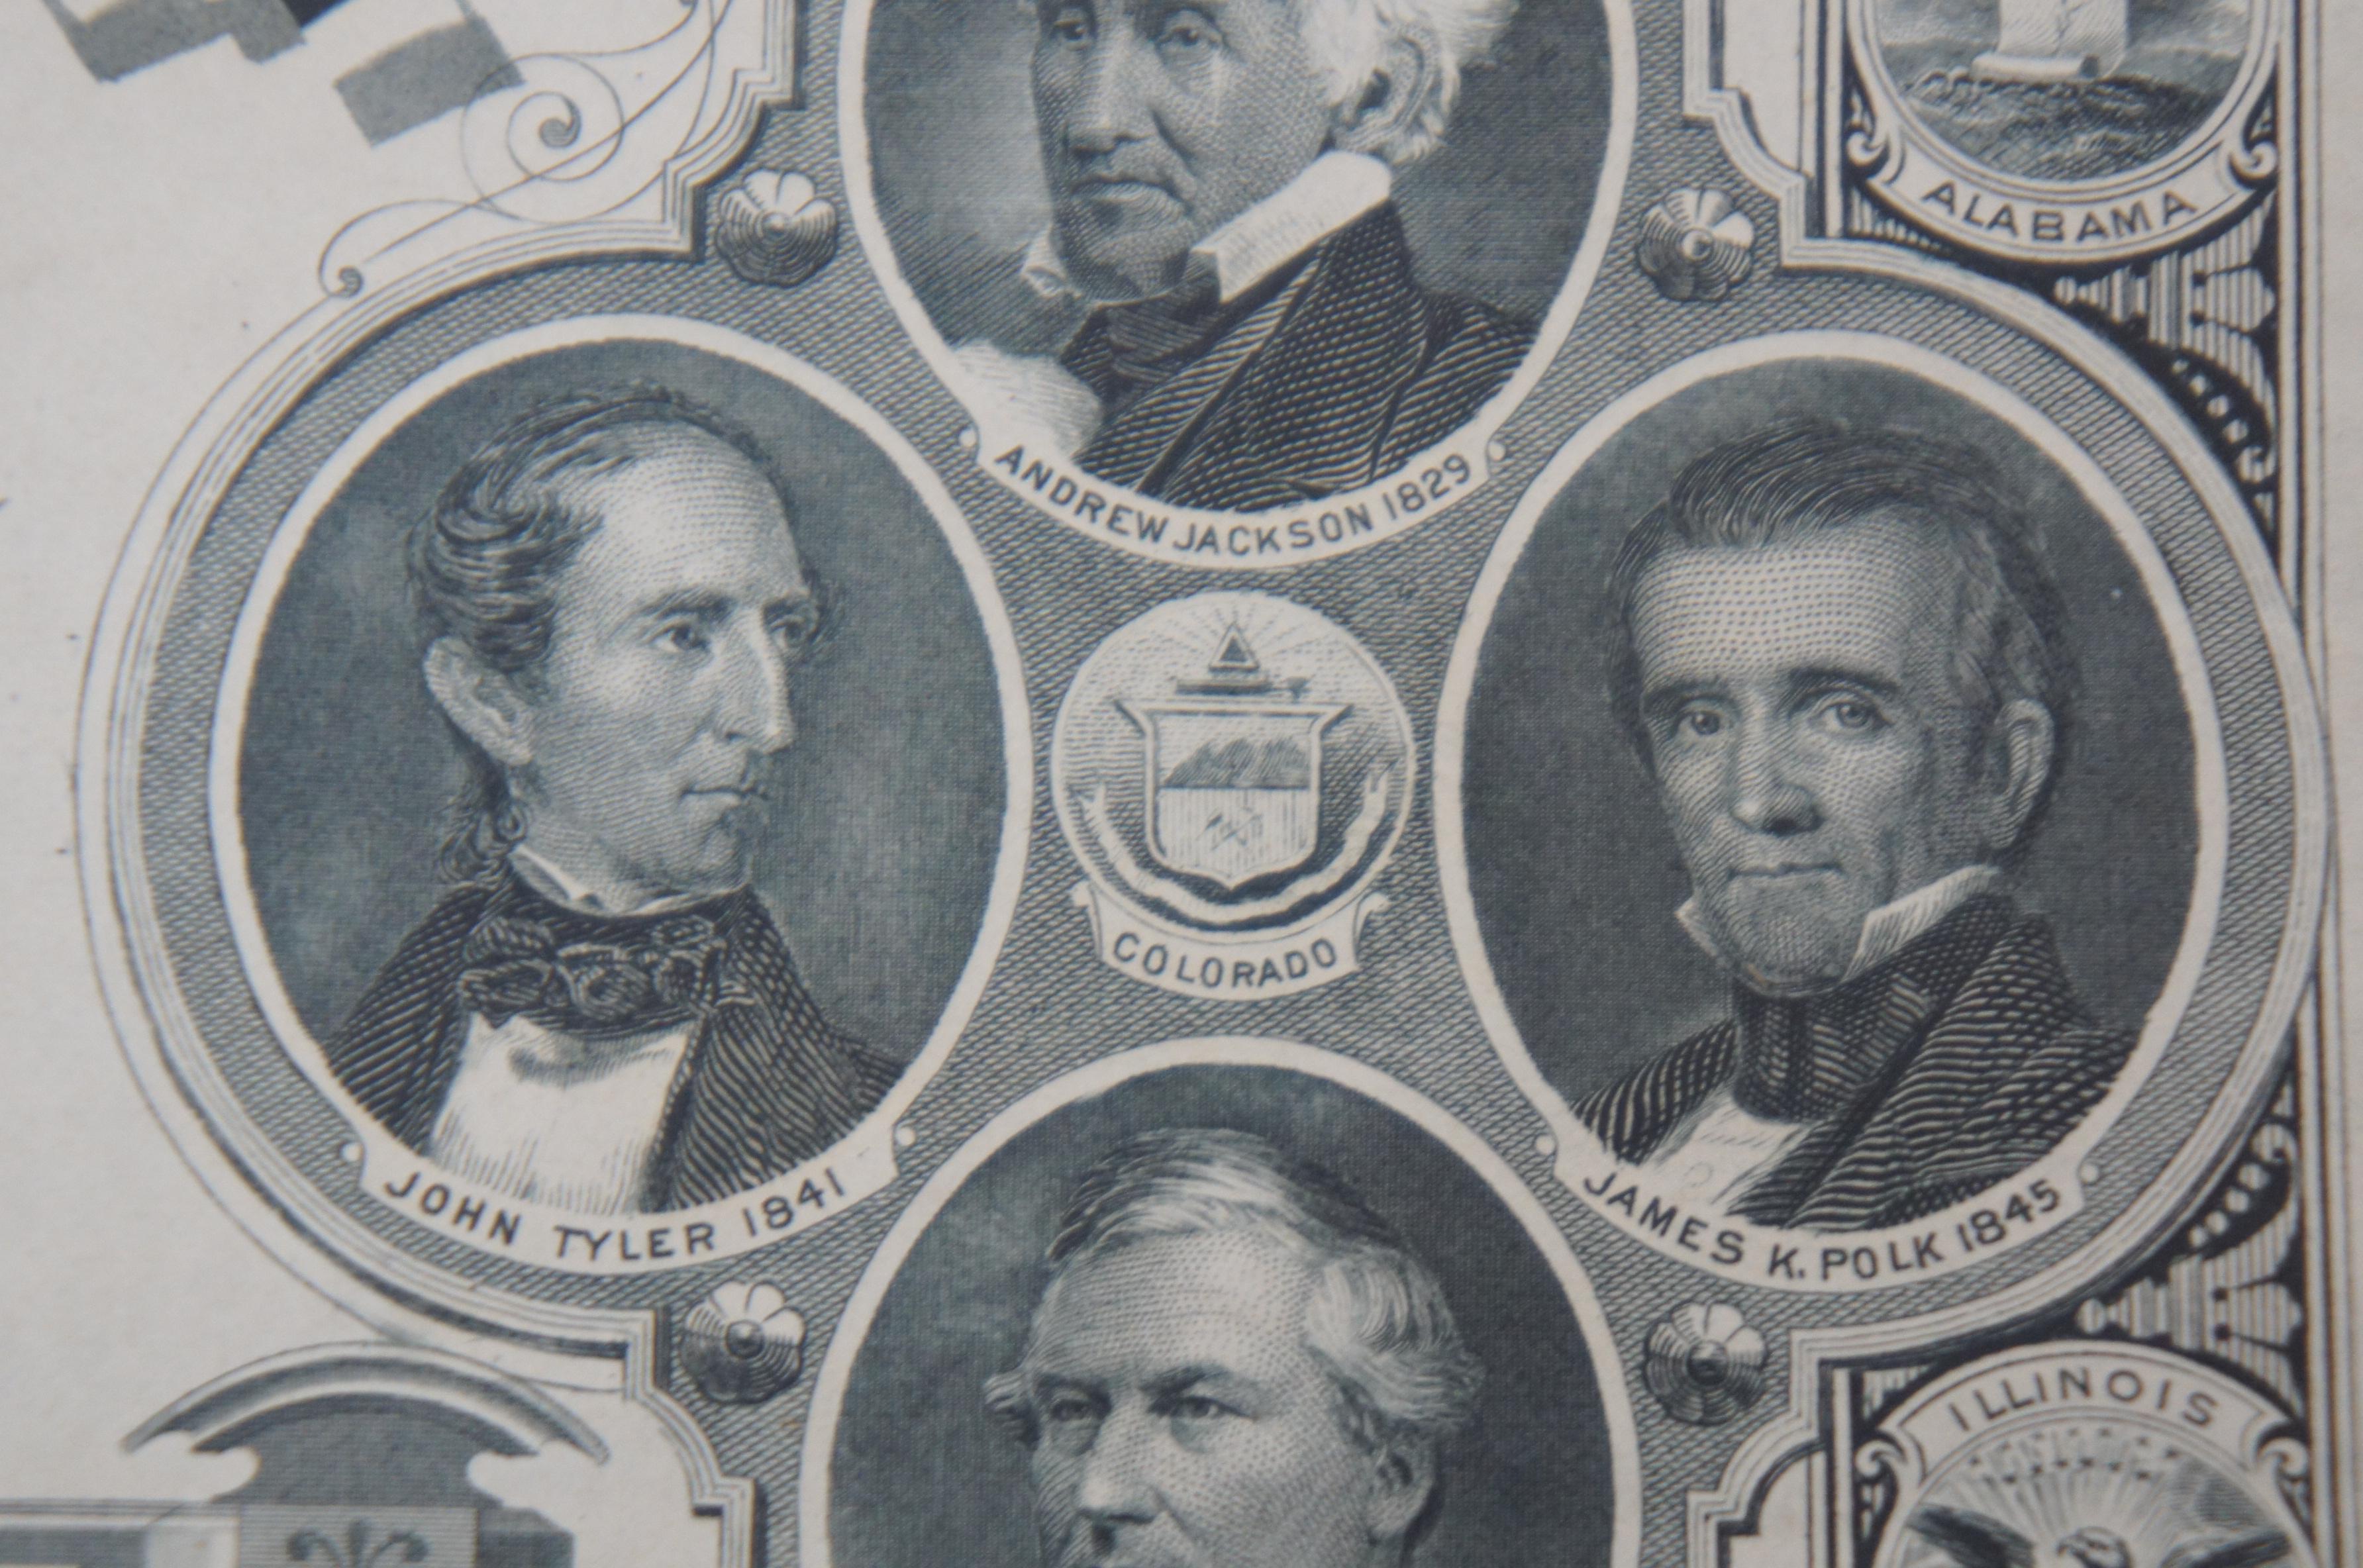 1876 Antique American Centennial Bank Note Engraving 18 Presidents 36 States 6